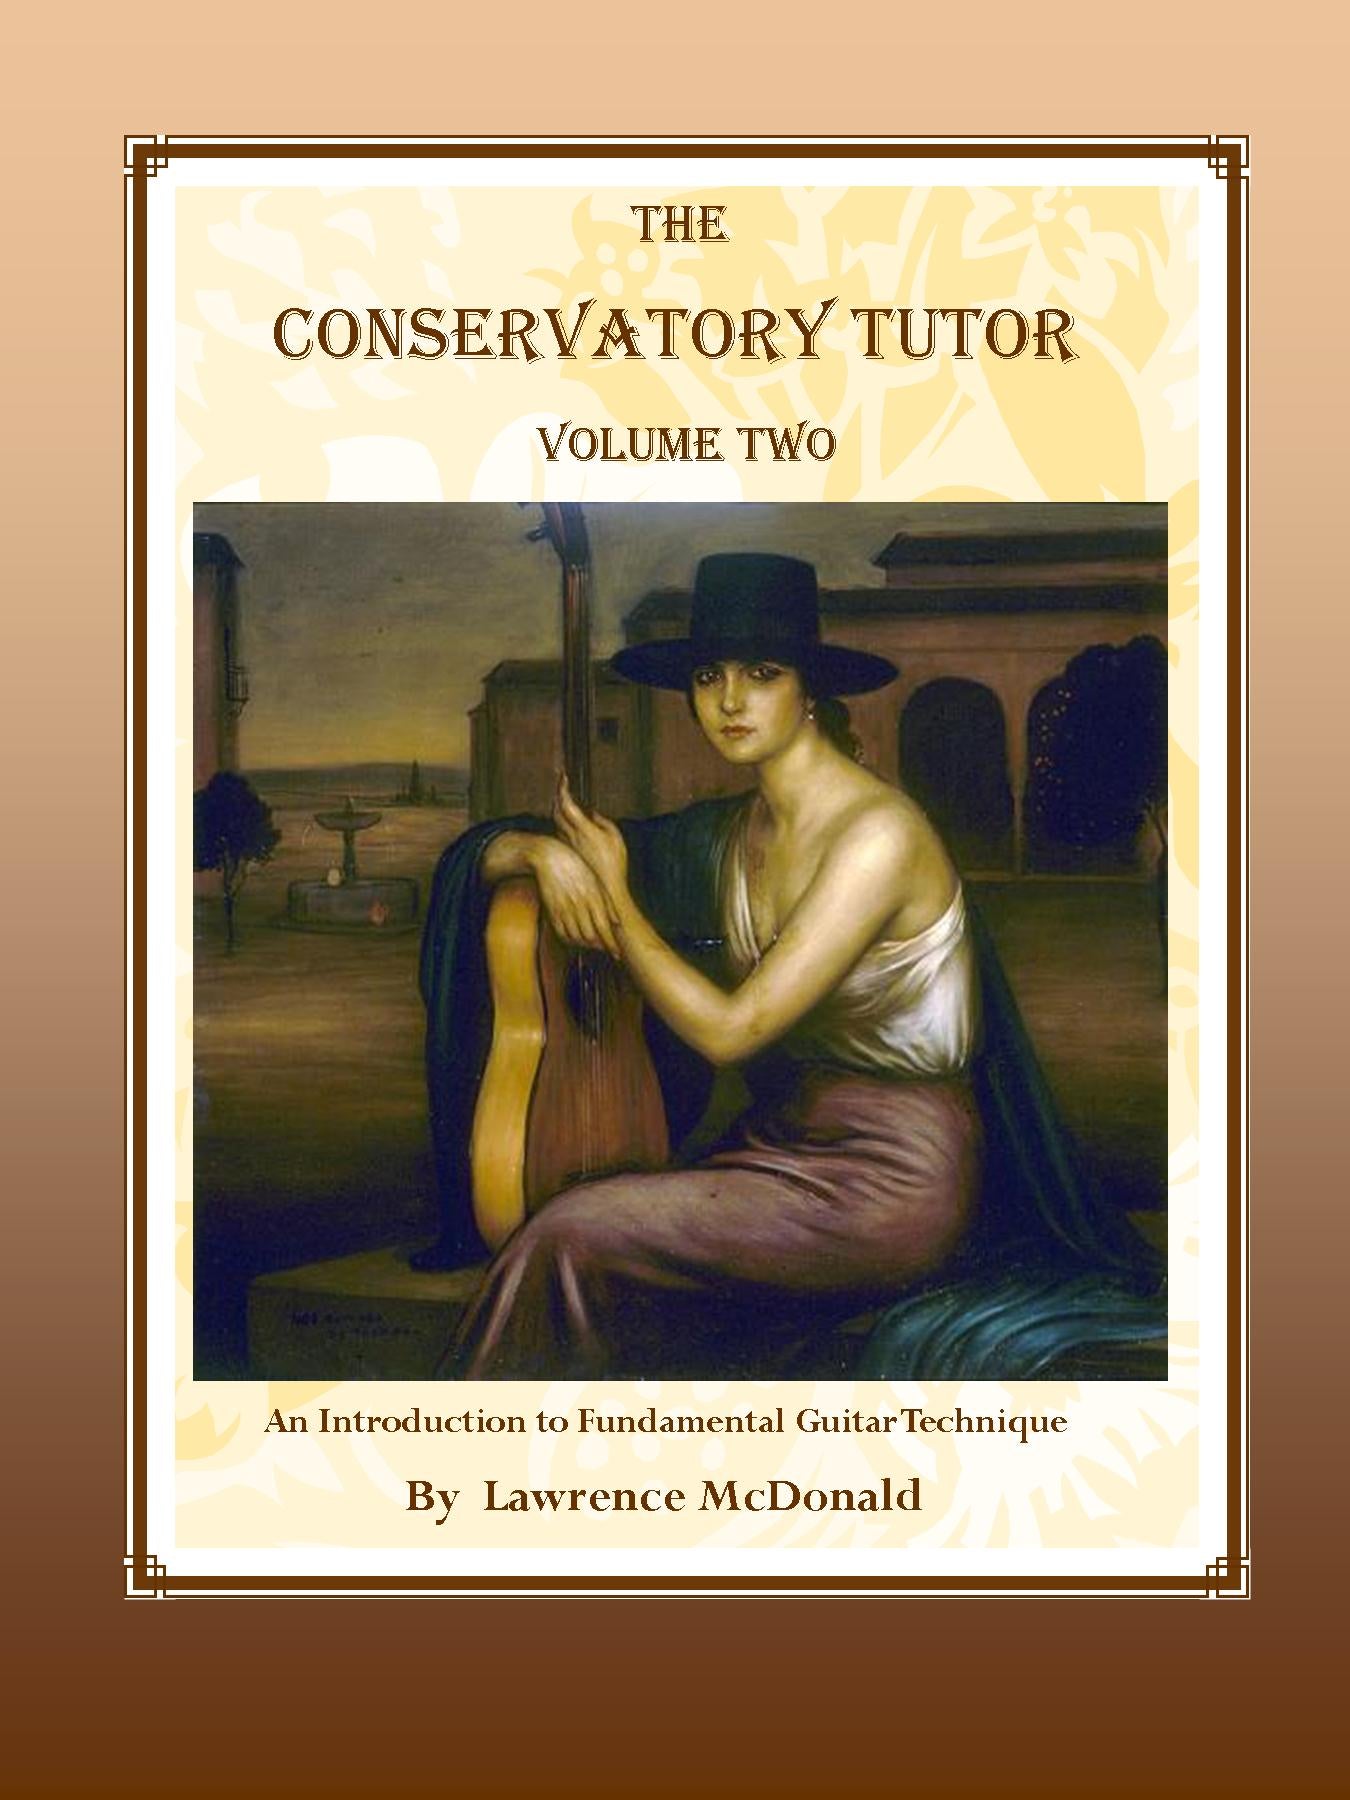 The Conservatory Tutor Vol. 2, Lare McDonald - cover